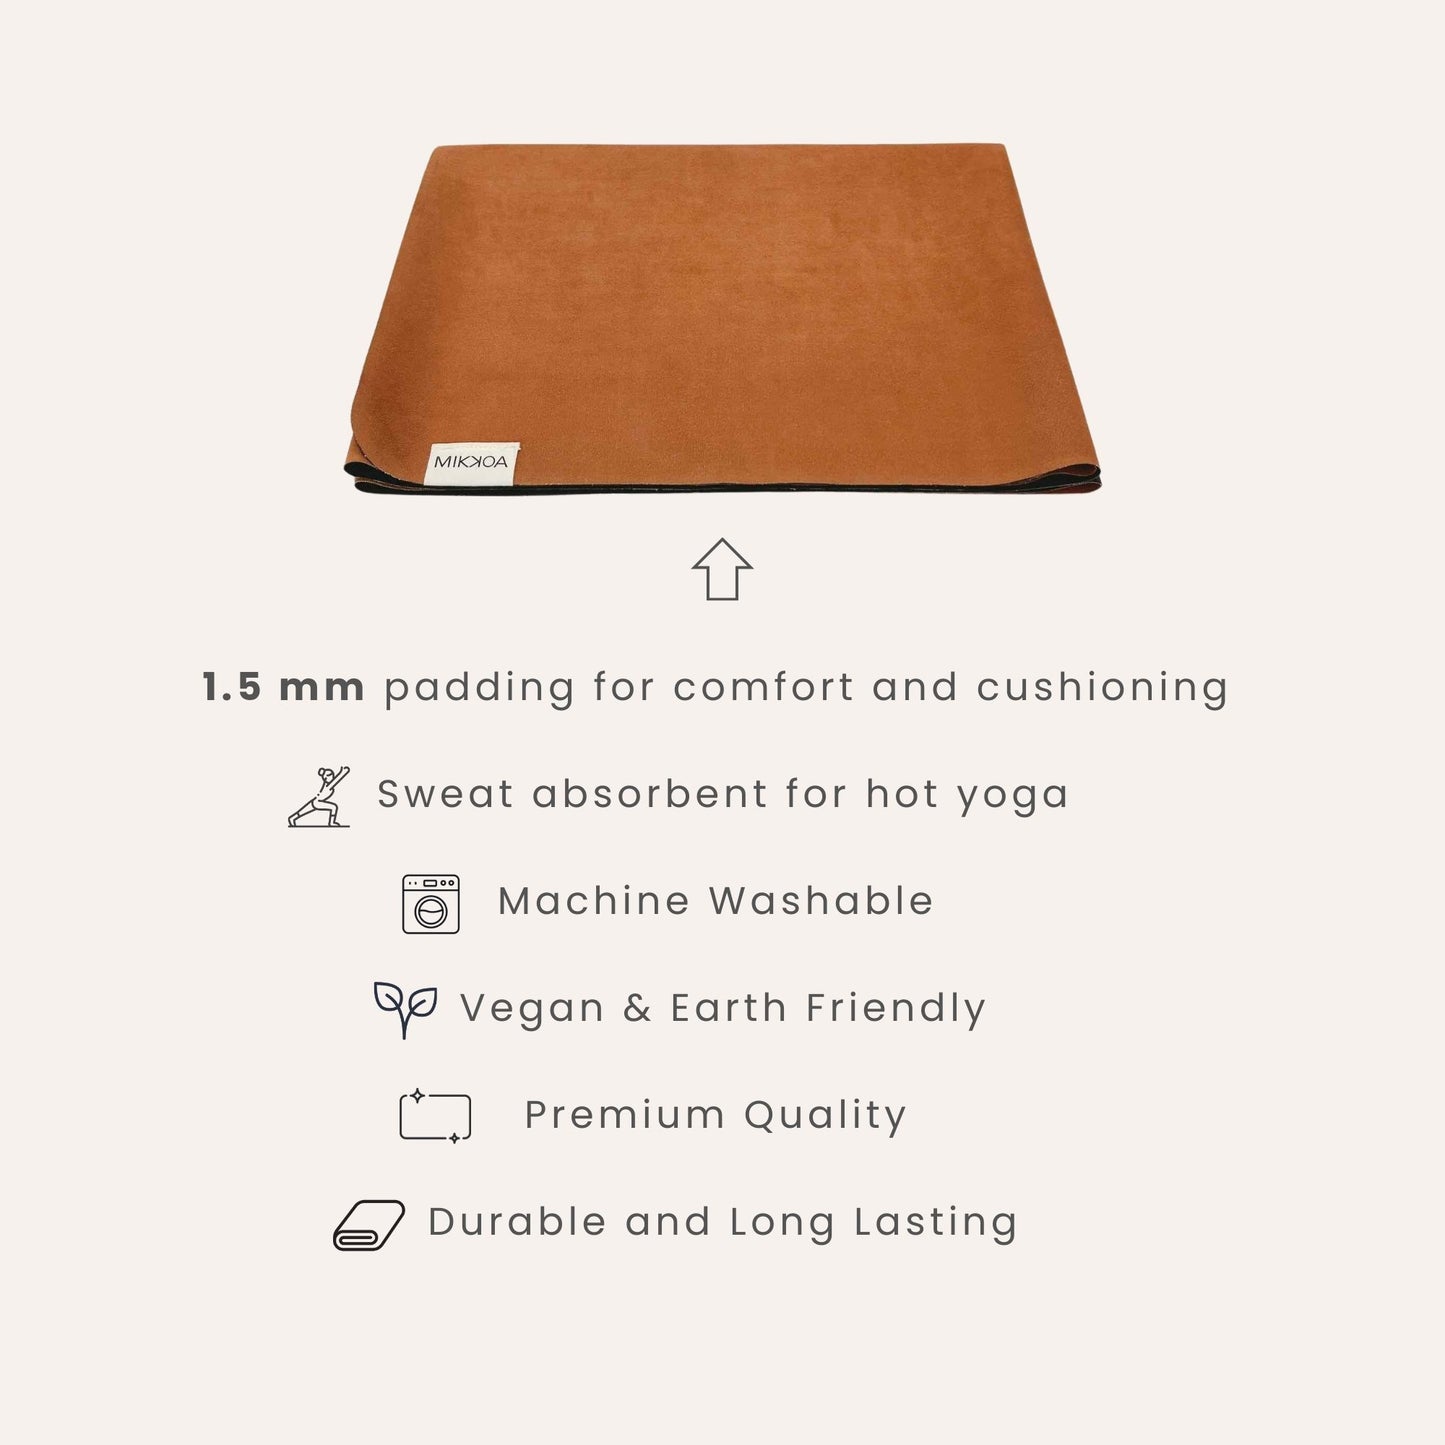 Foldable Yoga Mat-Orange Folded Yoga Mat Feature-Mikkoa Foldable Yoga Mat